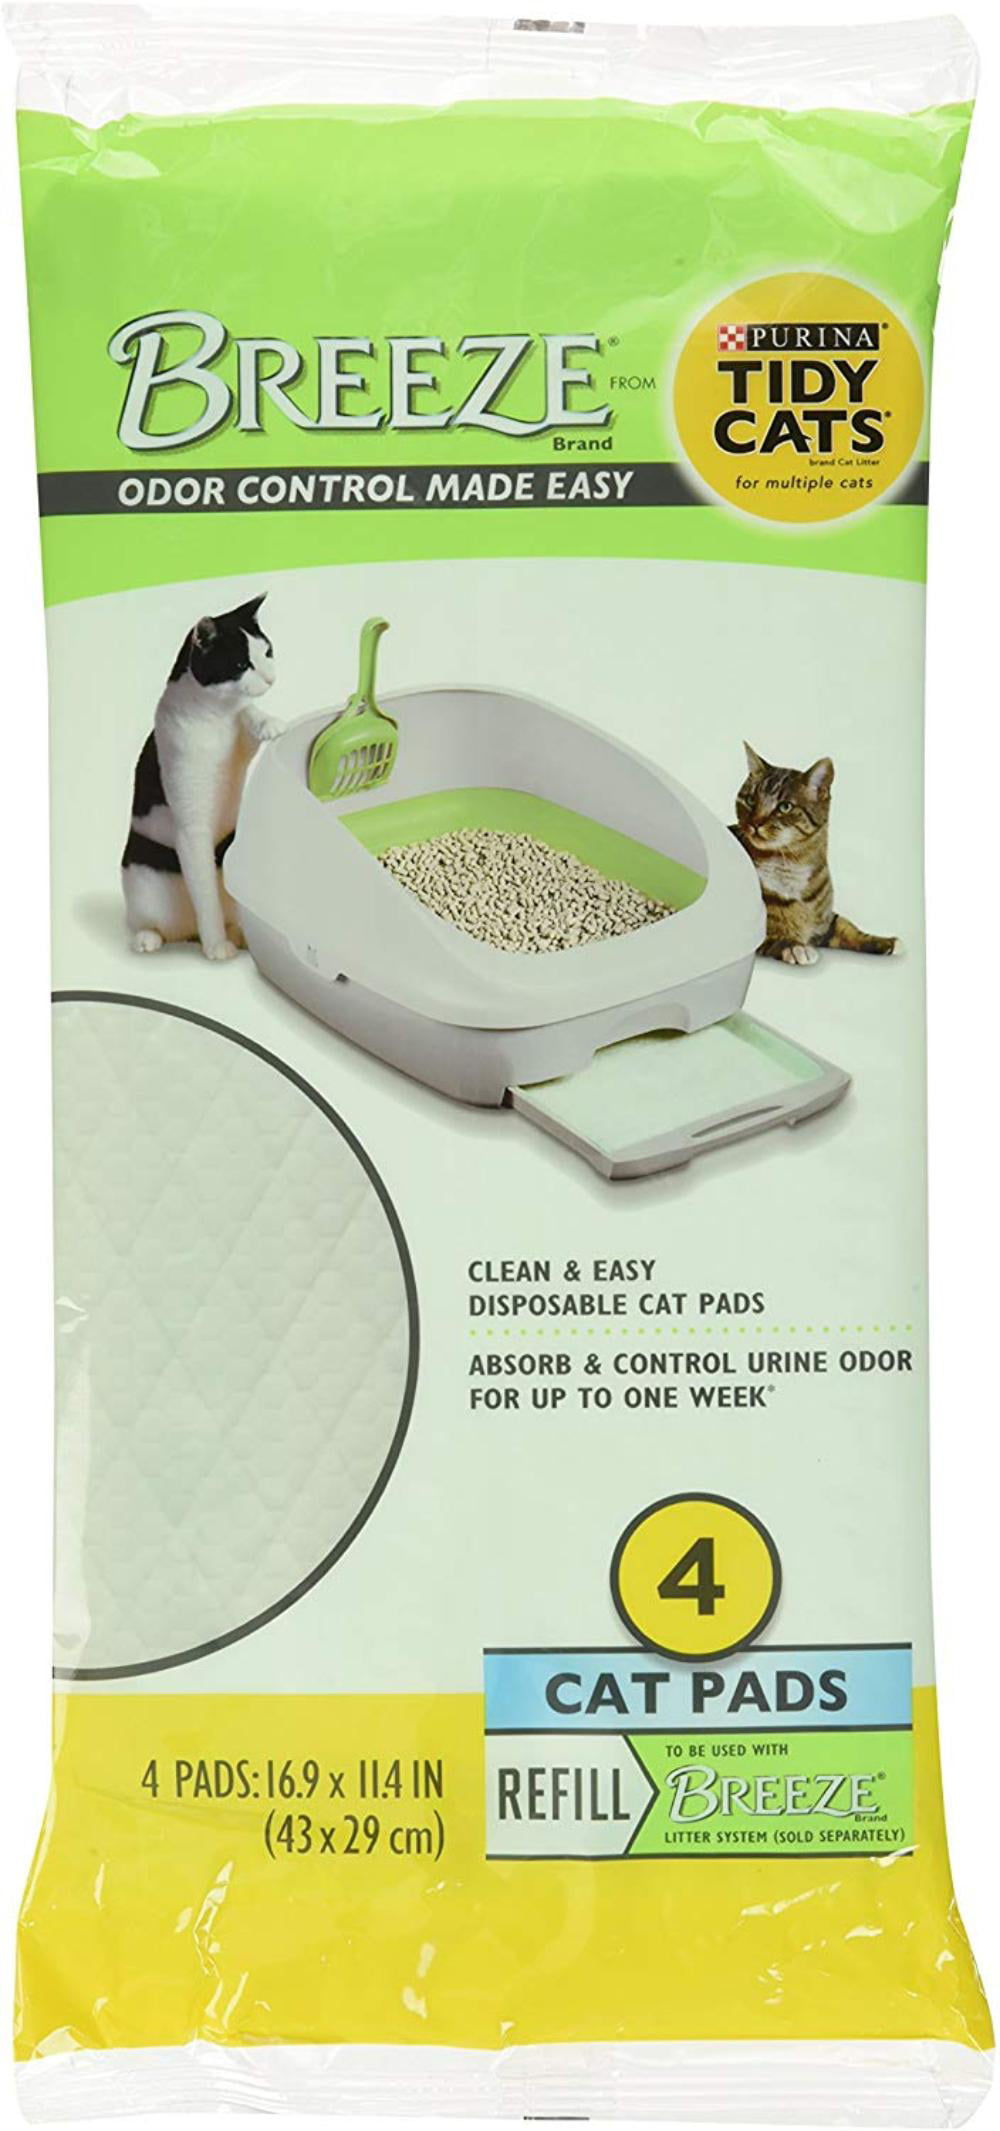 Purina Tidy Cats Cat Pads, BREEZE Refill Pack, 10 Pads eBay